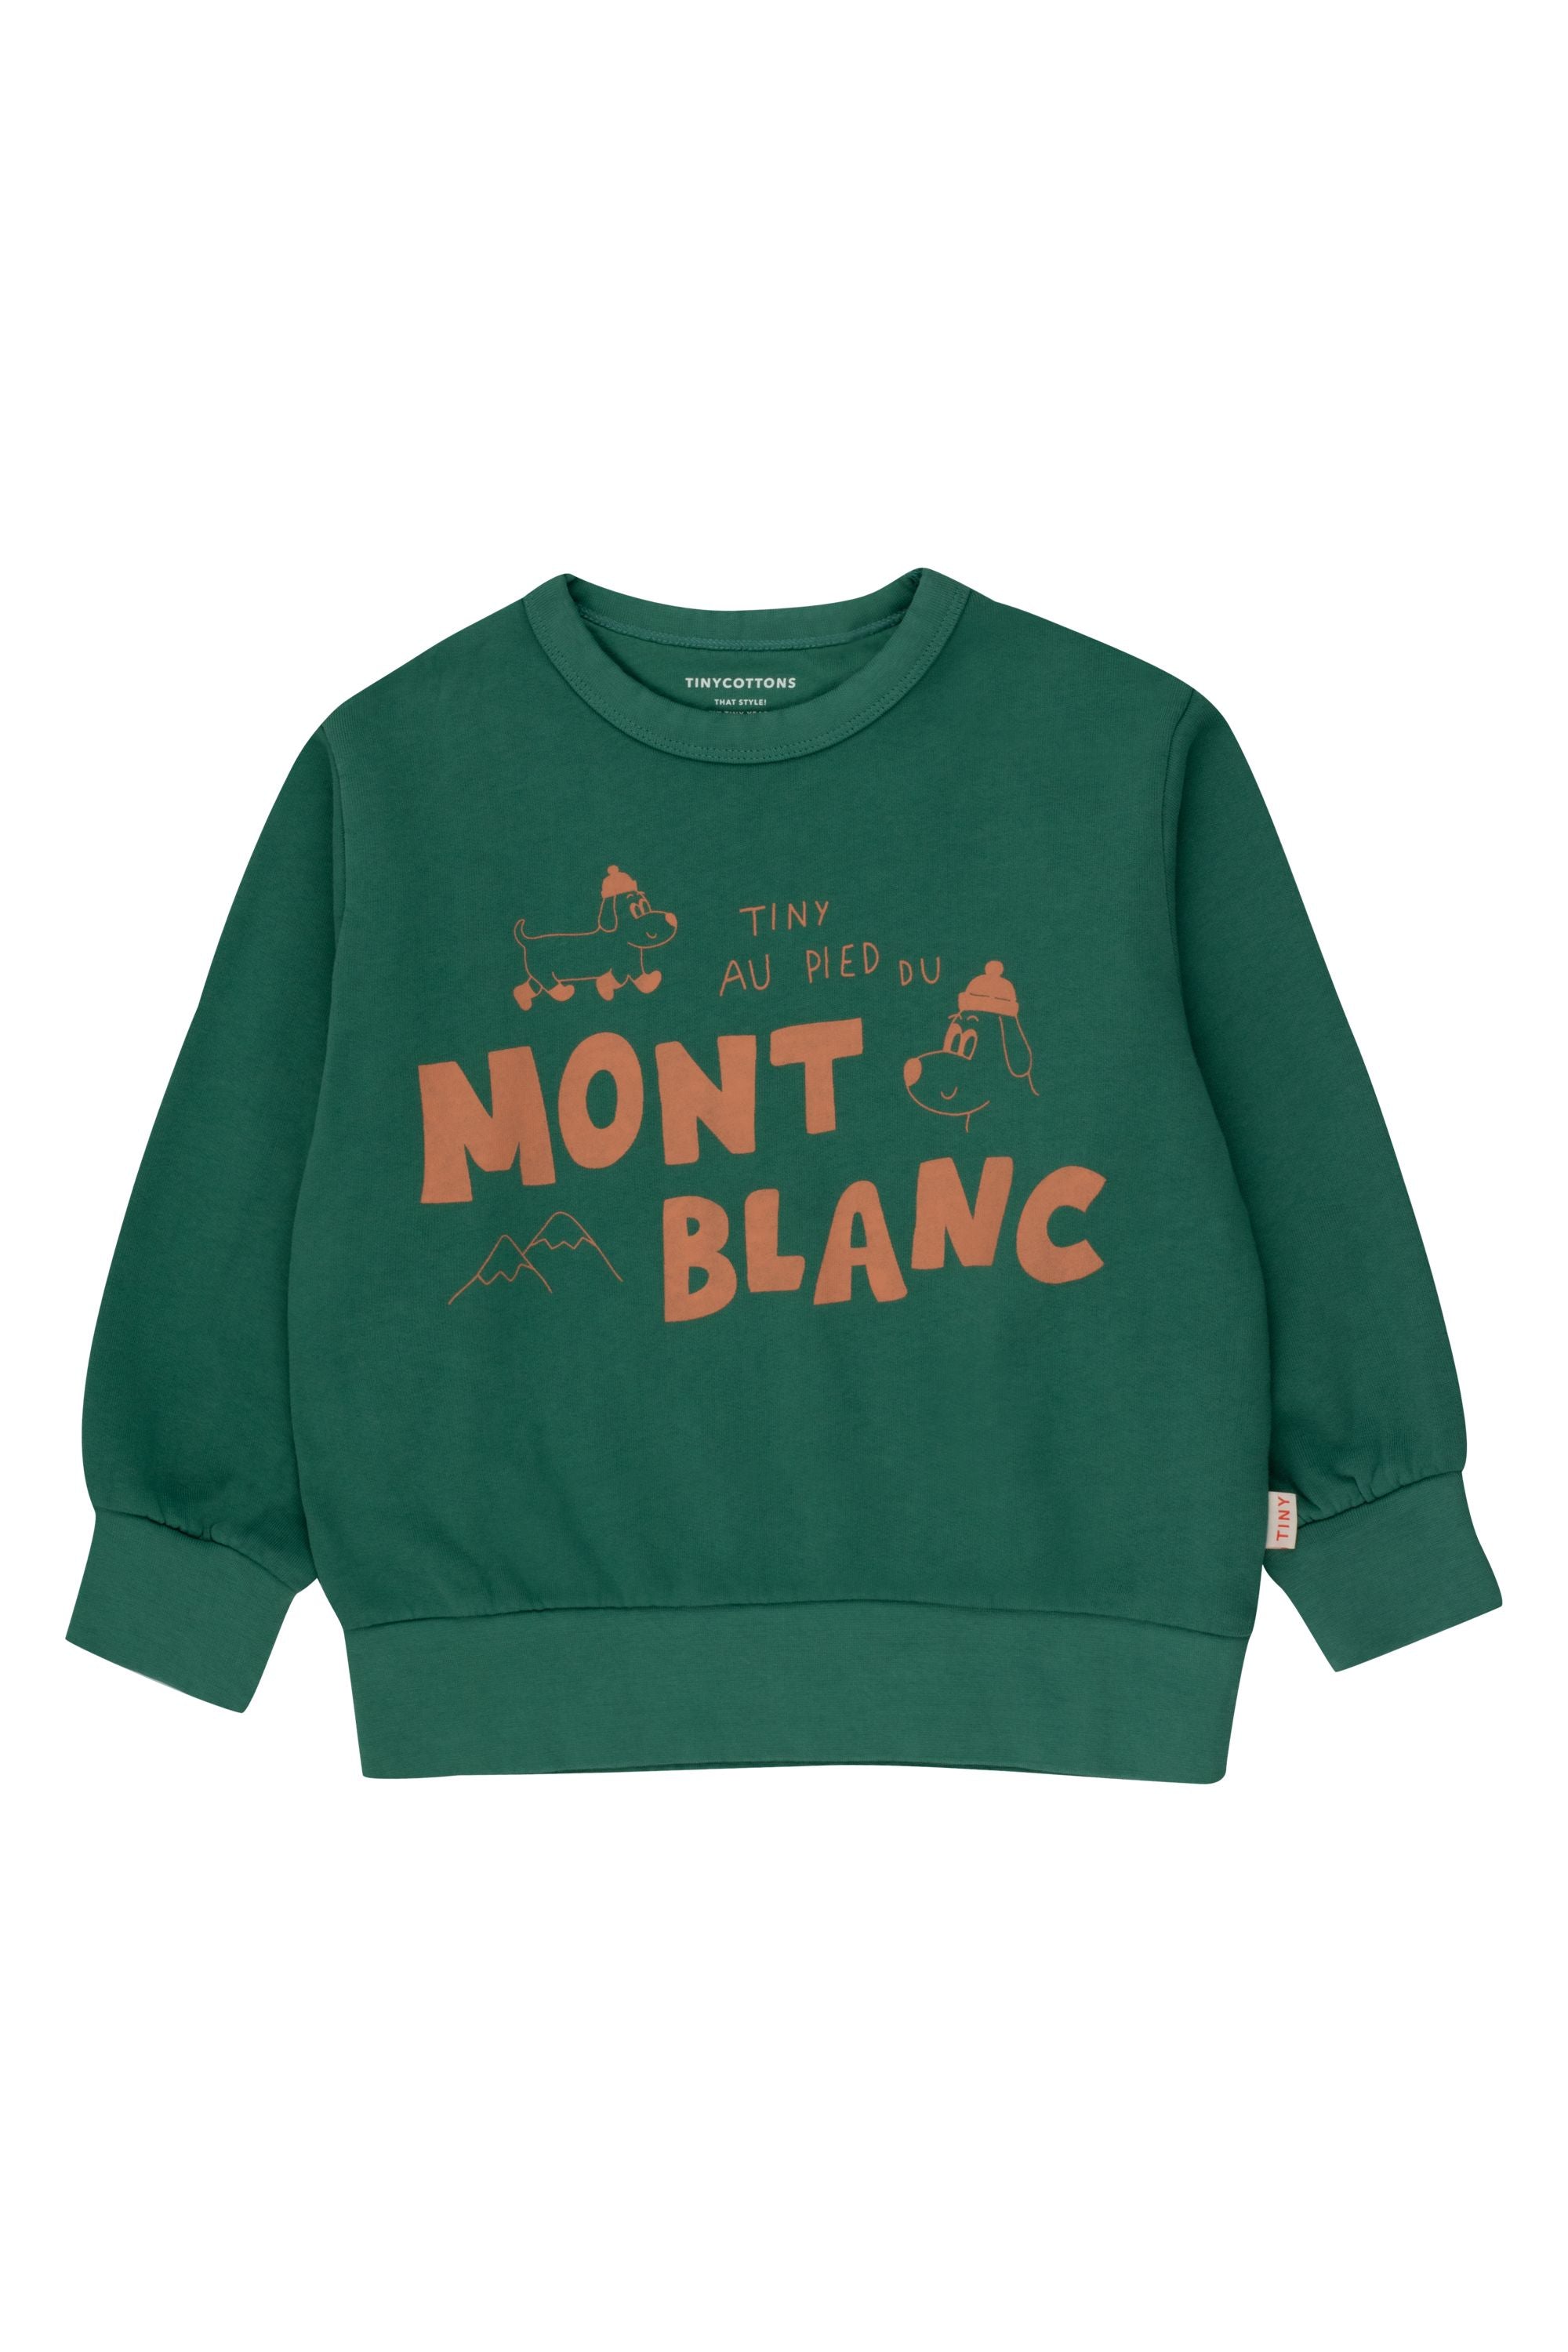 TinyCottons Mont Blanc Sweatshirt, Dark Green